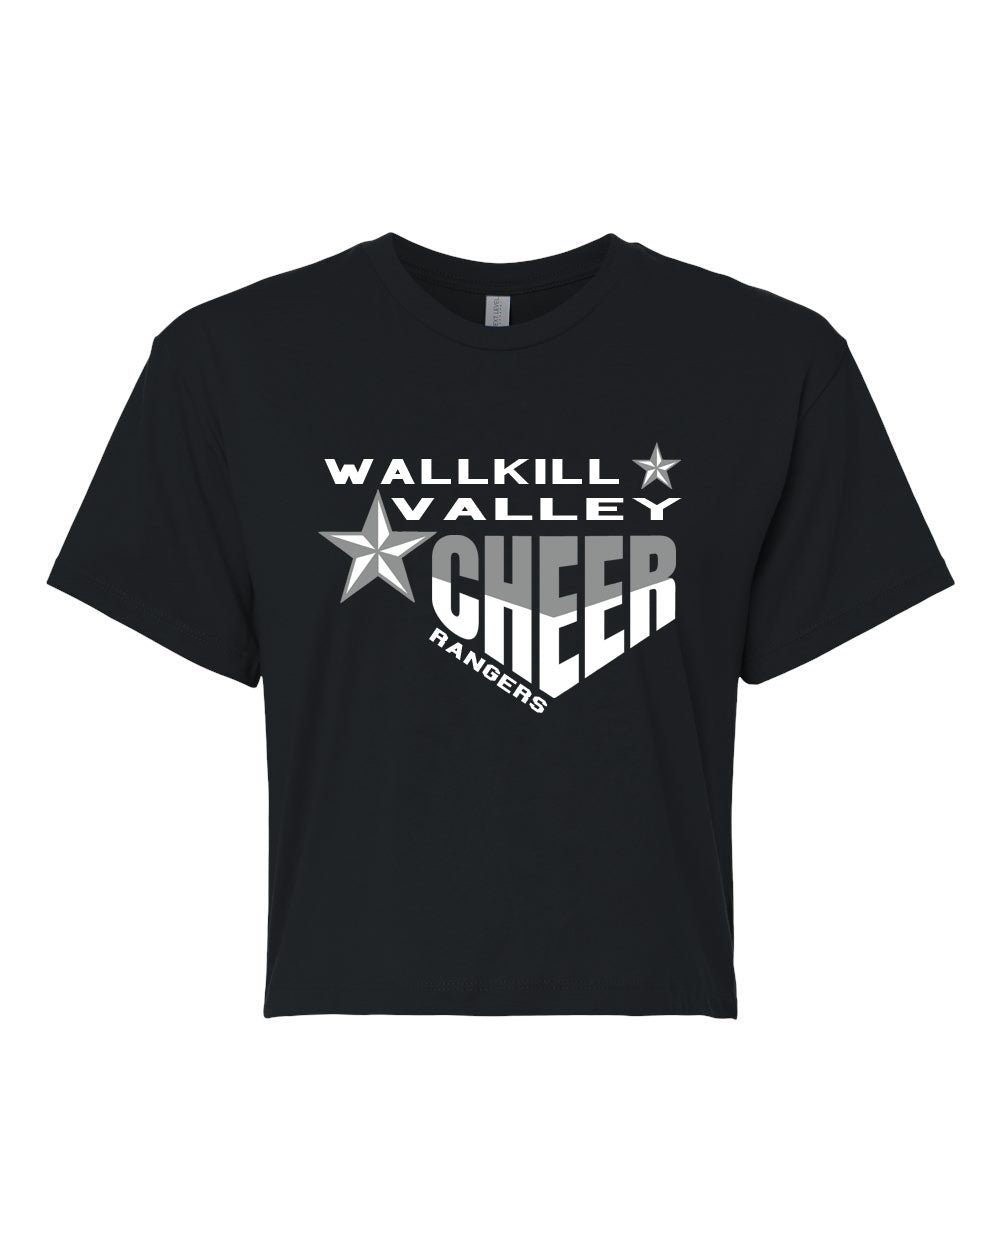 Wallkill Cheer Design 5 Crop Top